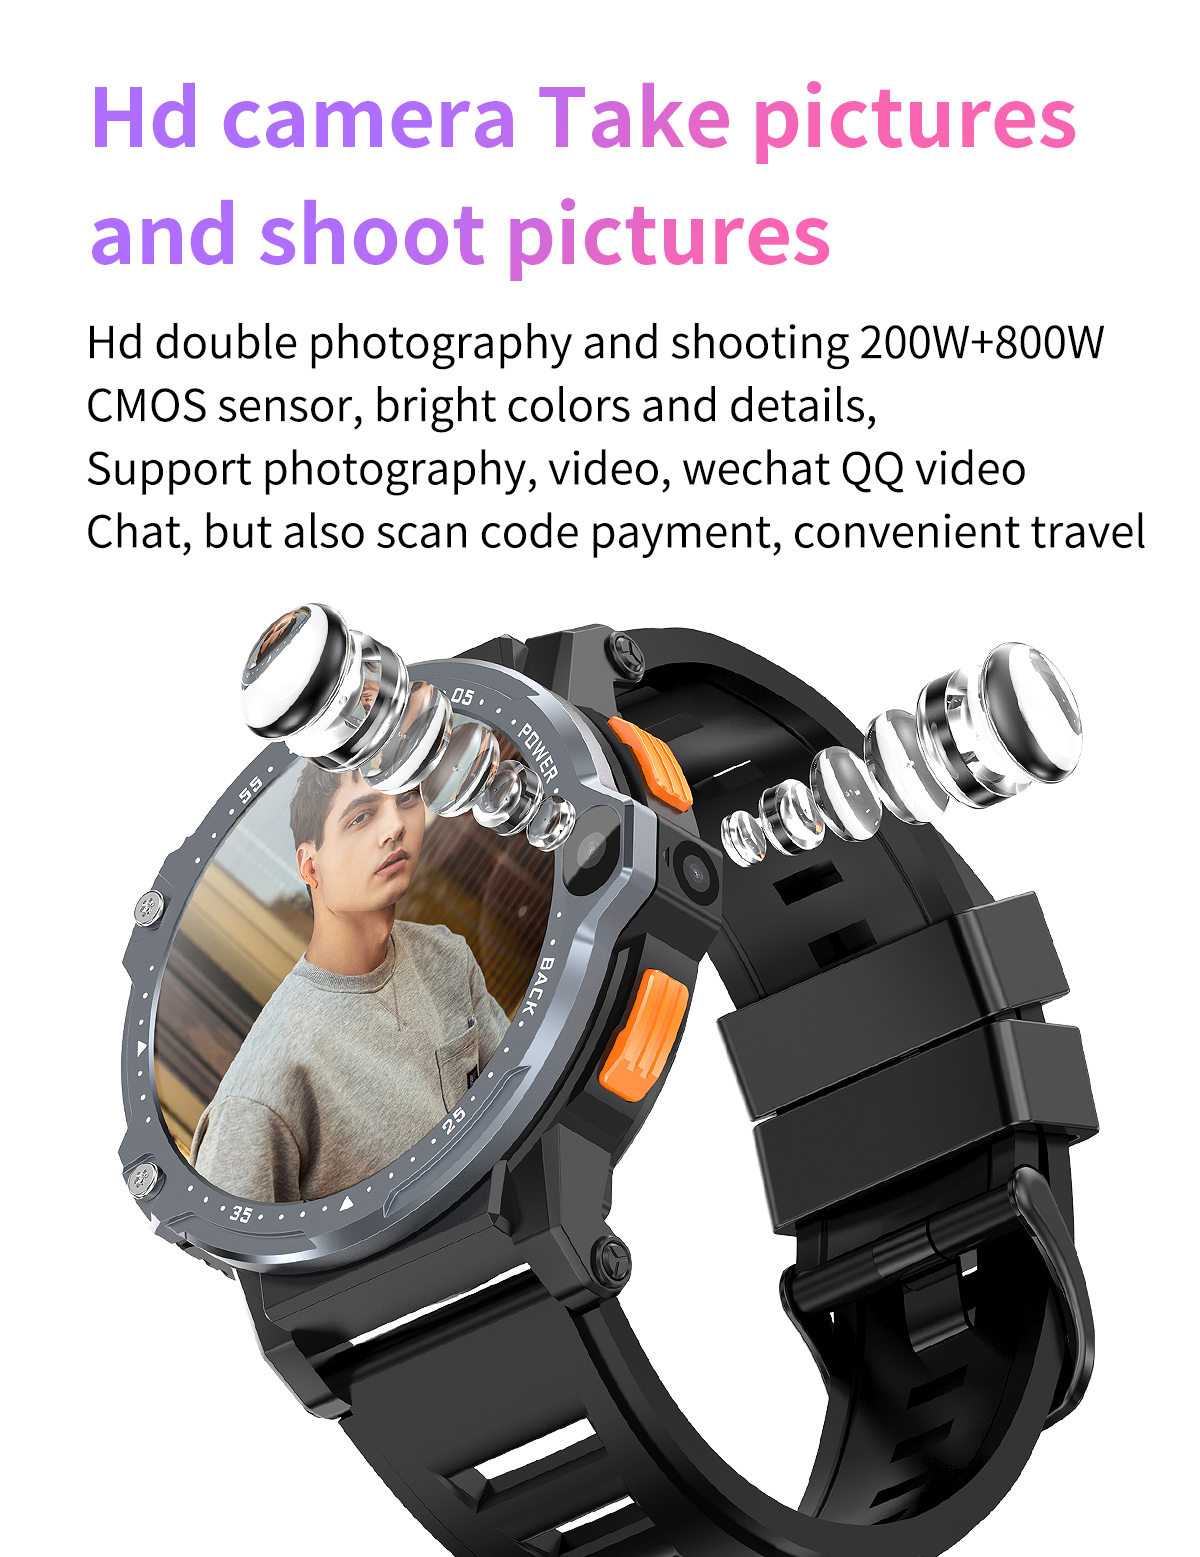 Smartwatch PGD e PG999: confronto tra i migliori smartwatch Android 4G-Shenzhen Shengye Technology Co., Ltd